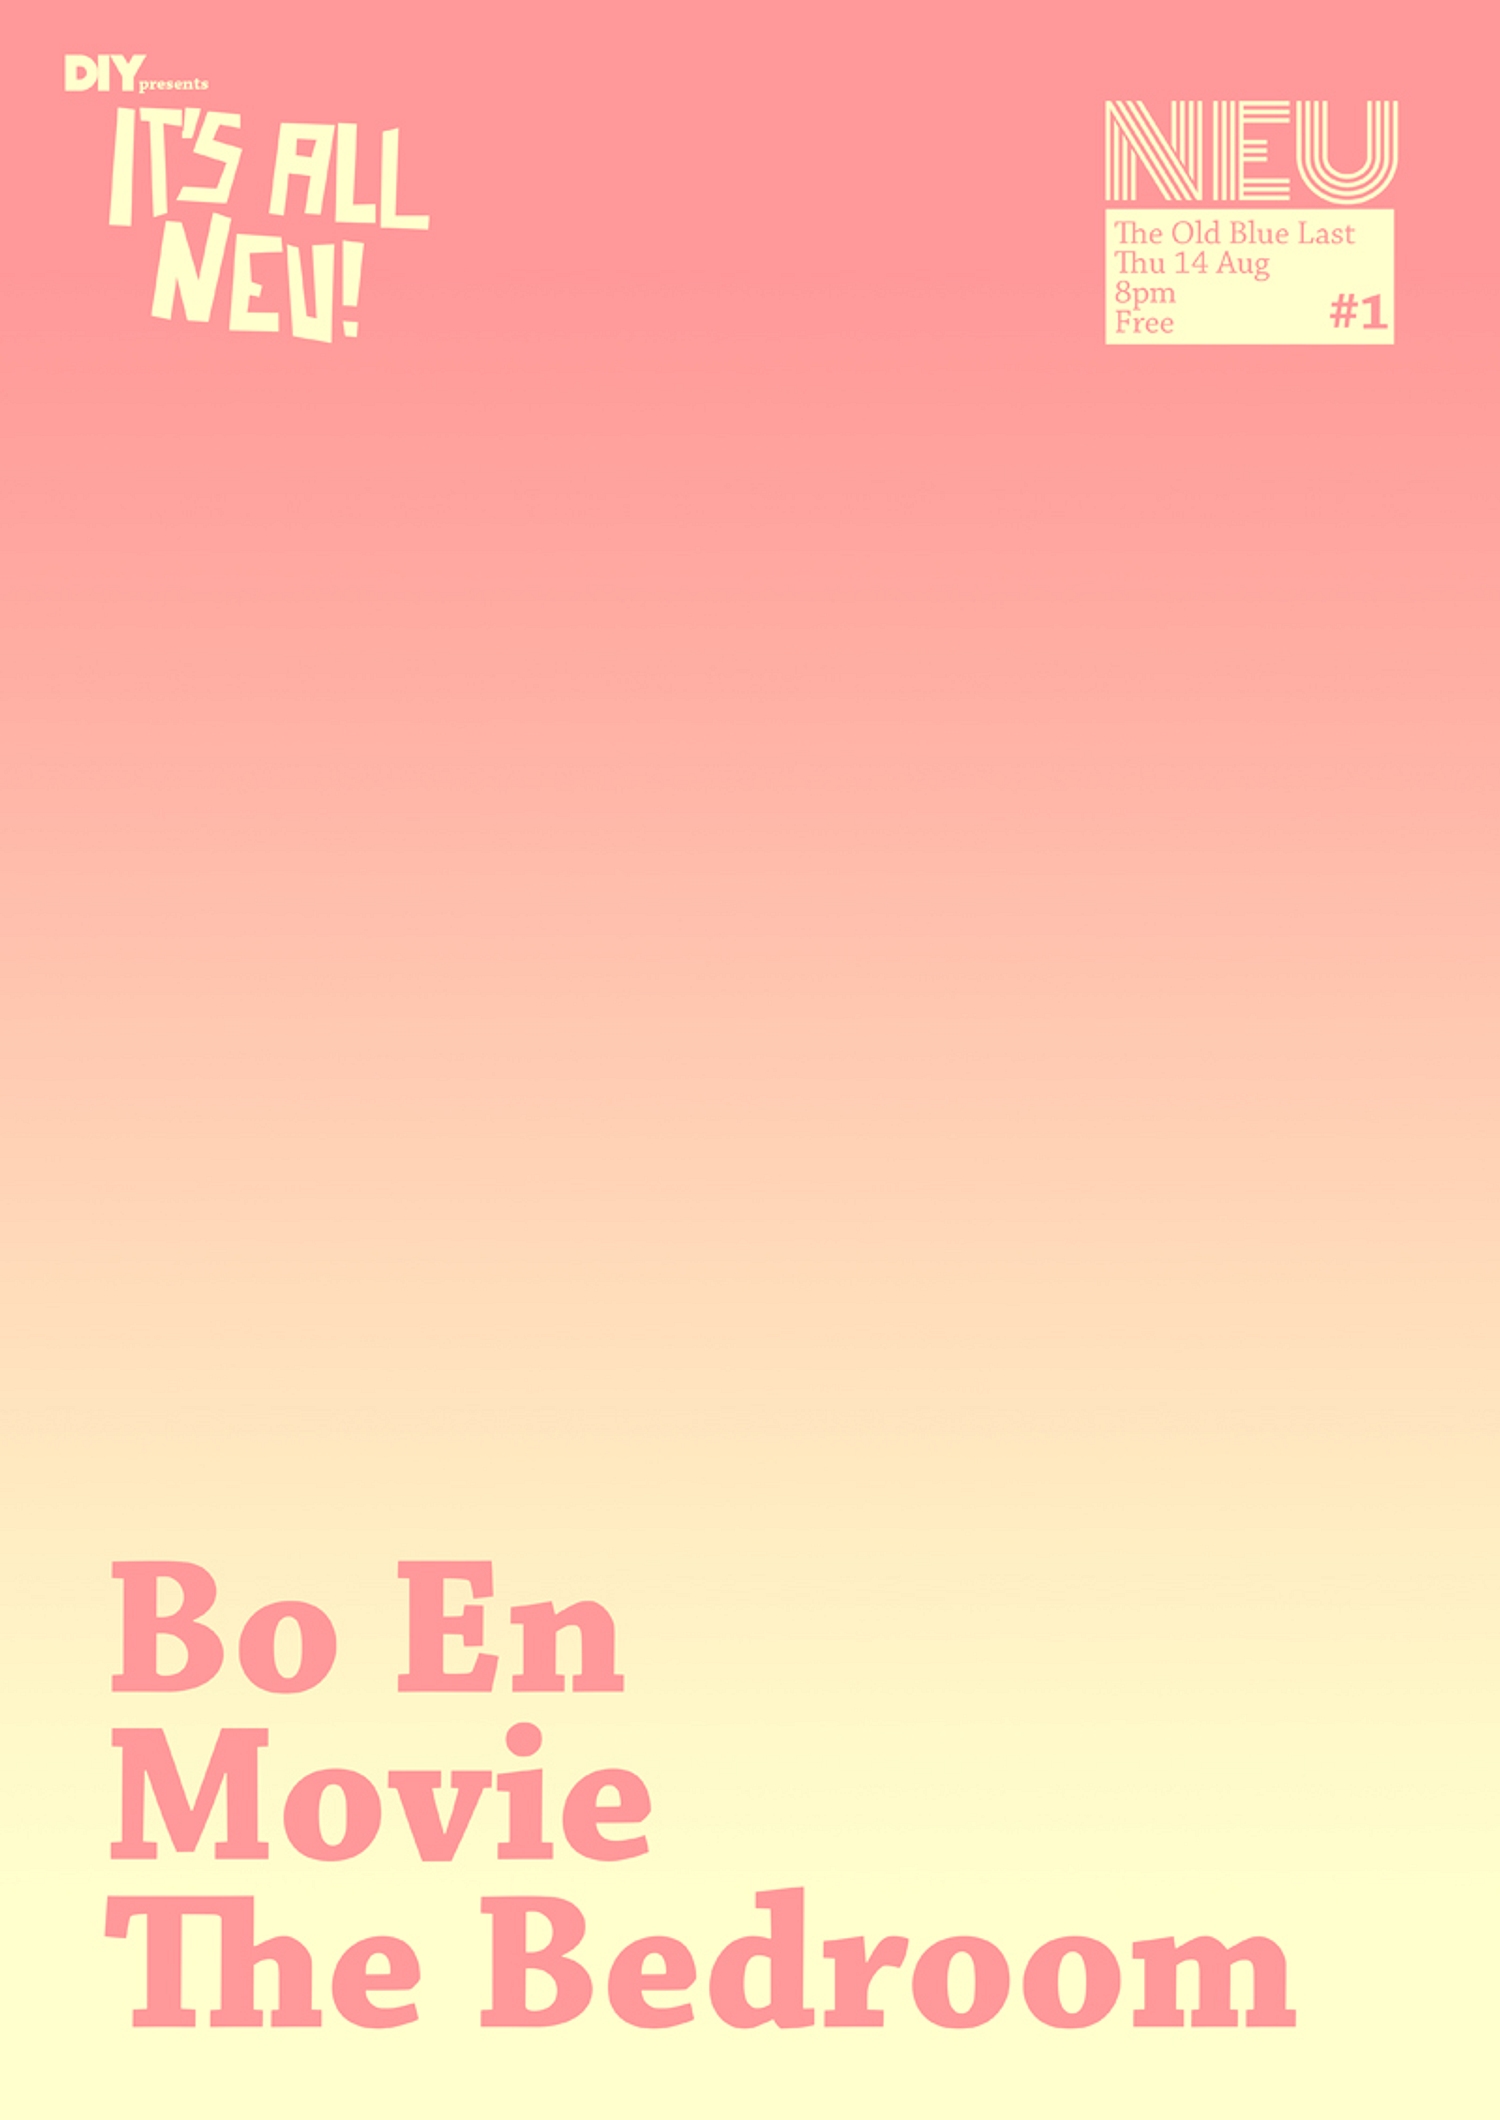 Bo En, The Bedroom, Movie to play DIY Presents 'It's All Neu!' London show